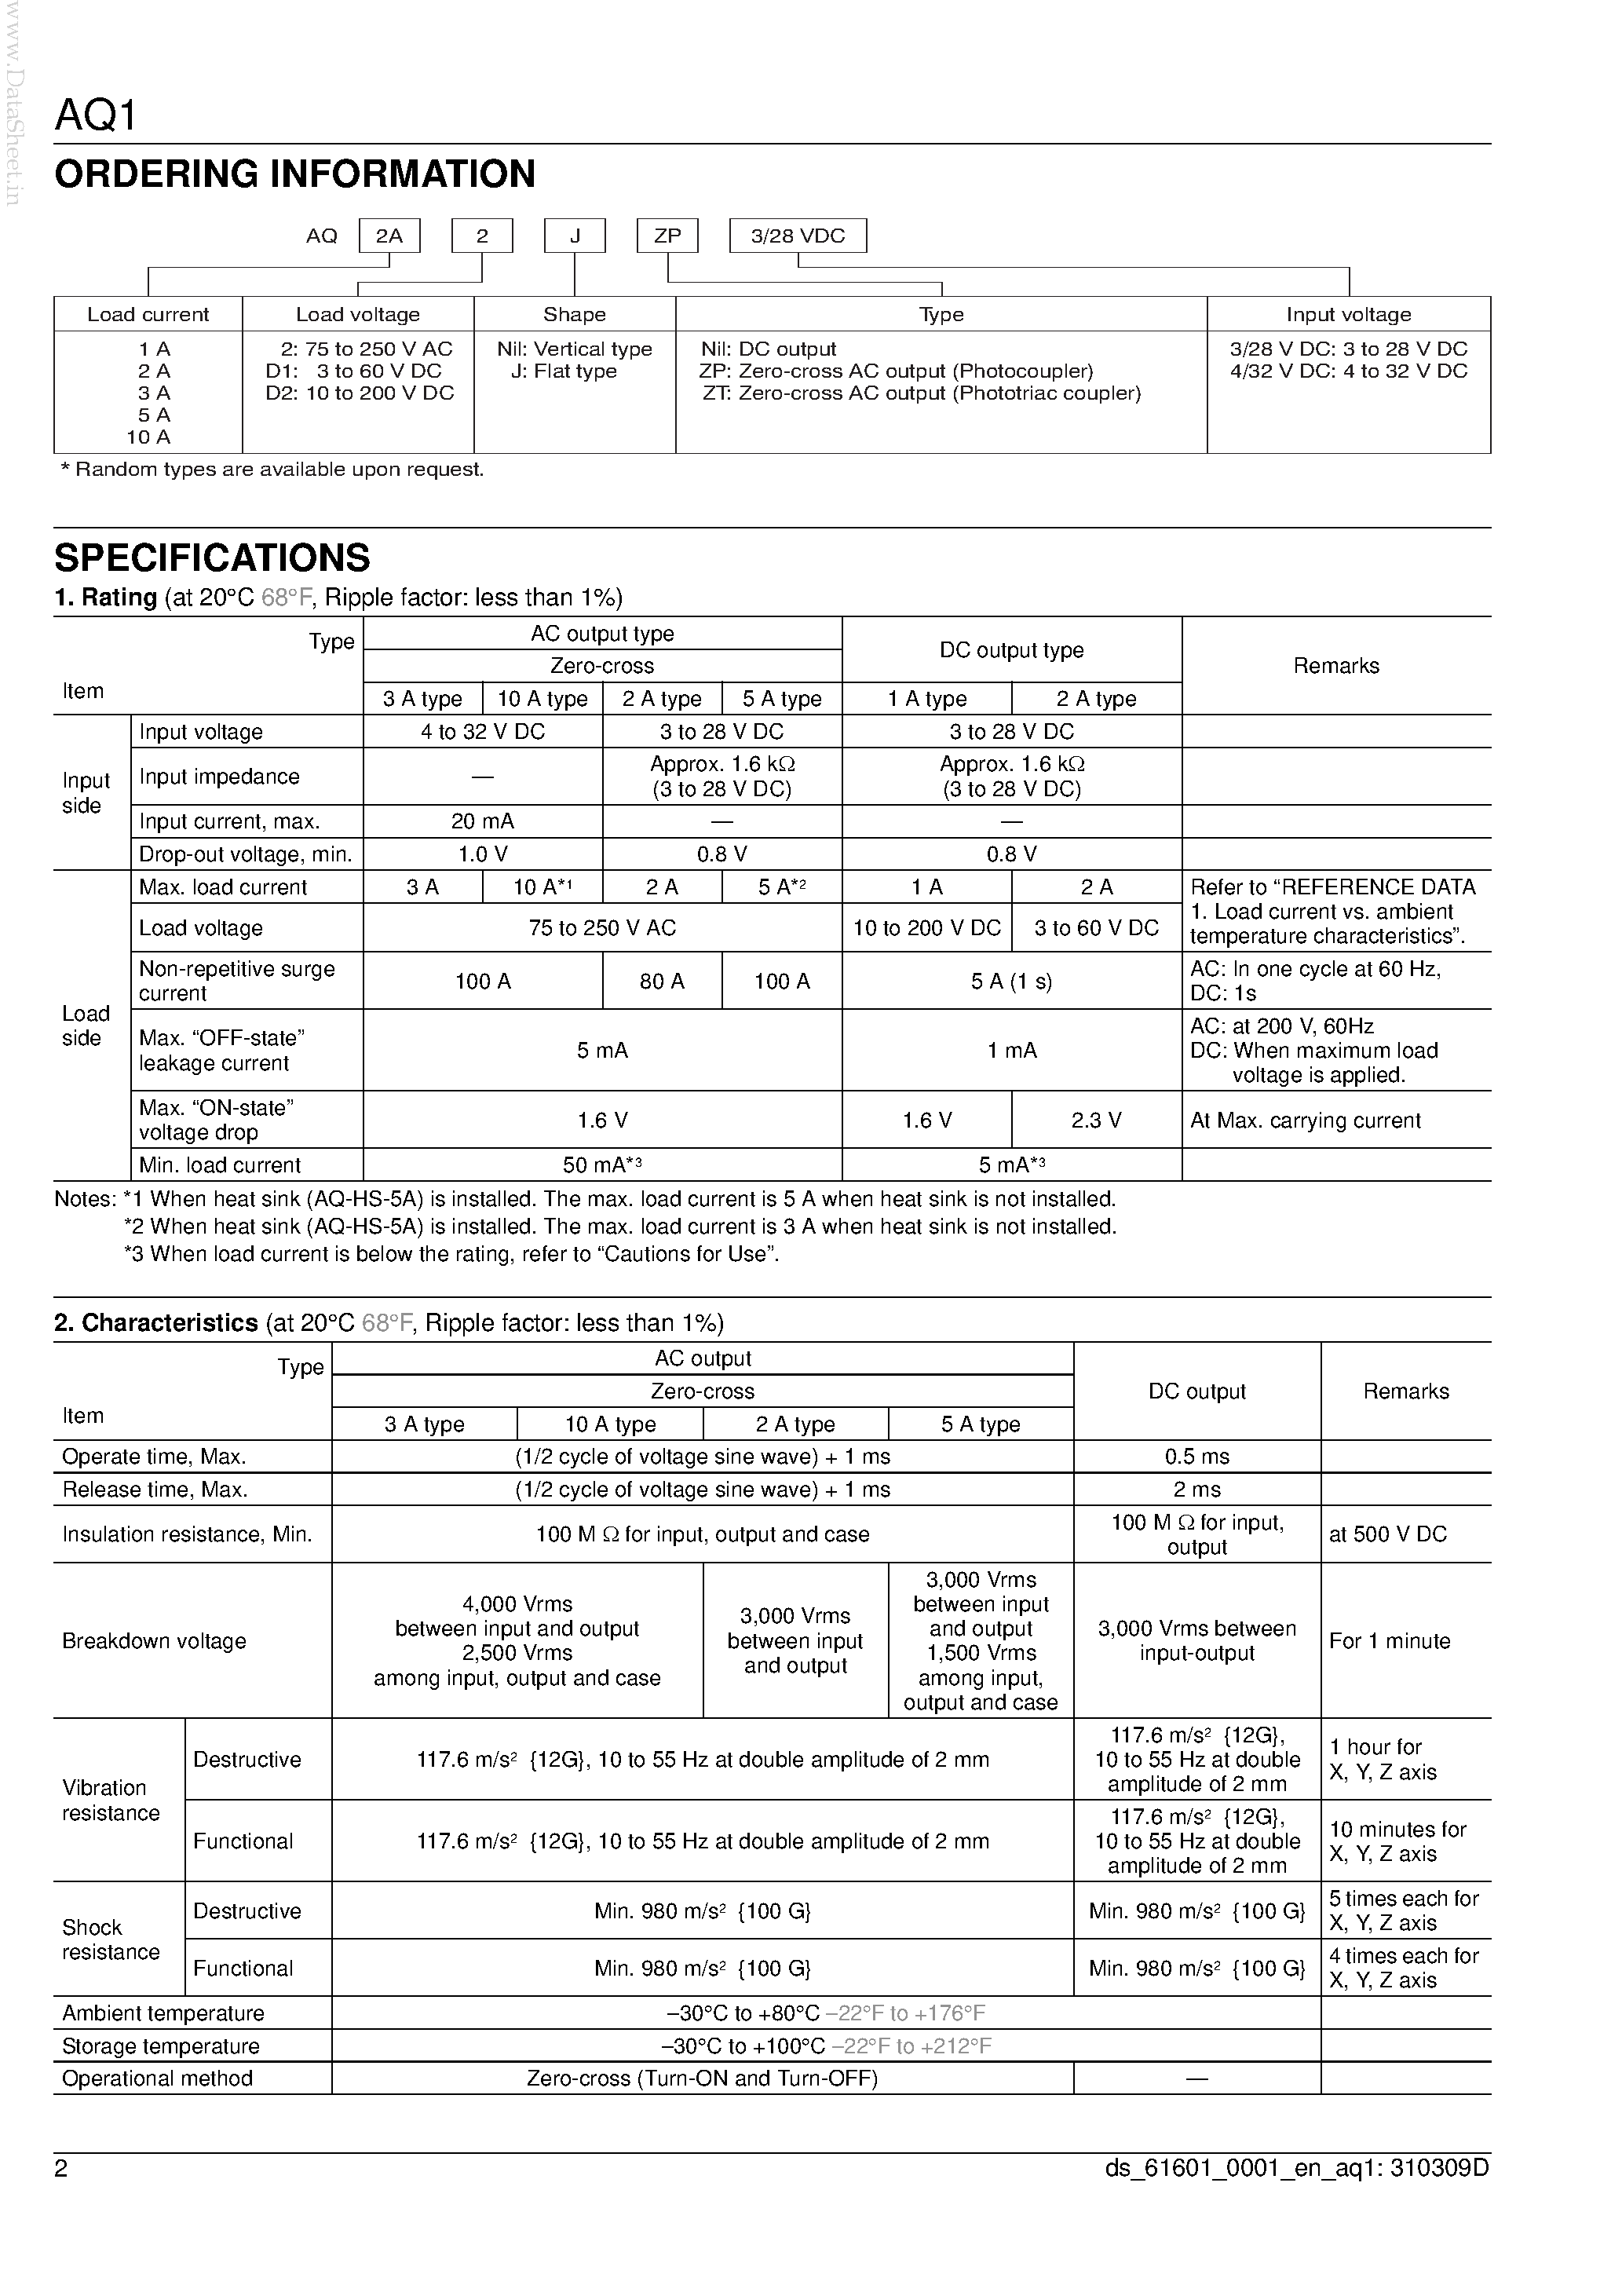 Datasheet AQ2A2-J-ZP3/28VDC - RELAY page 2